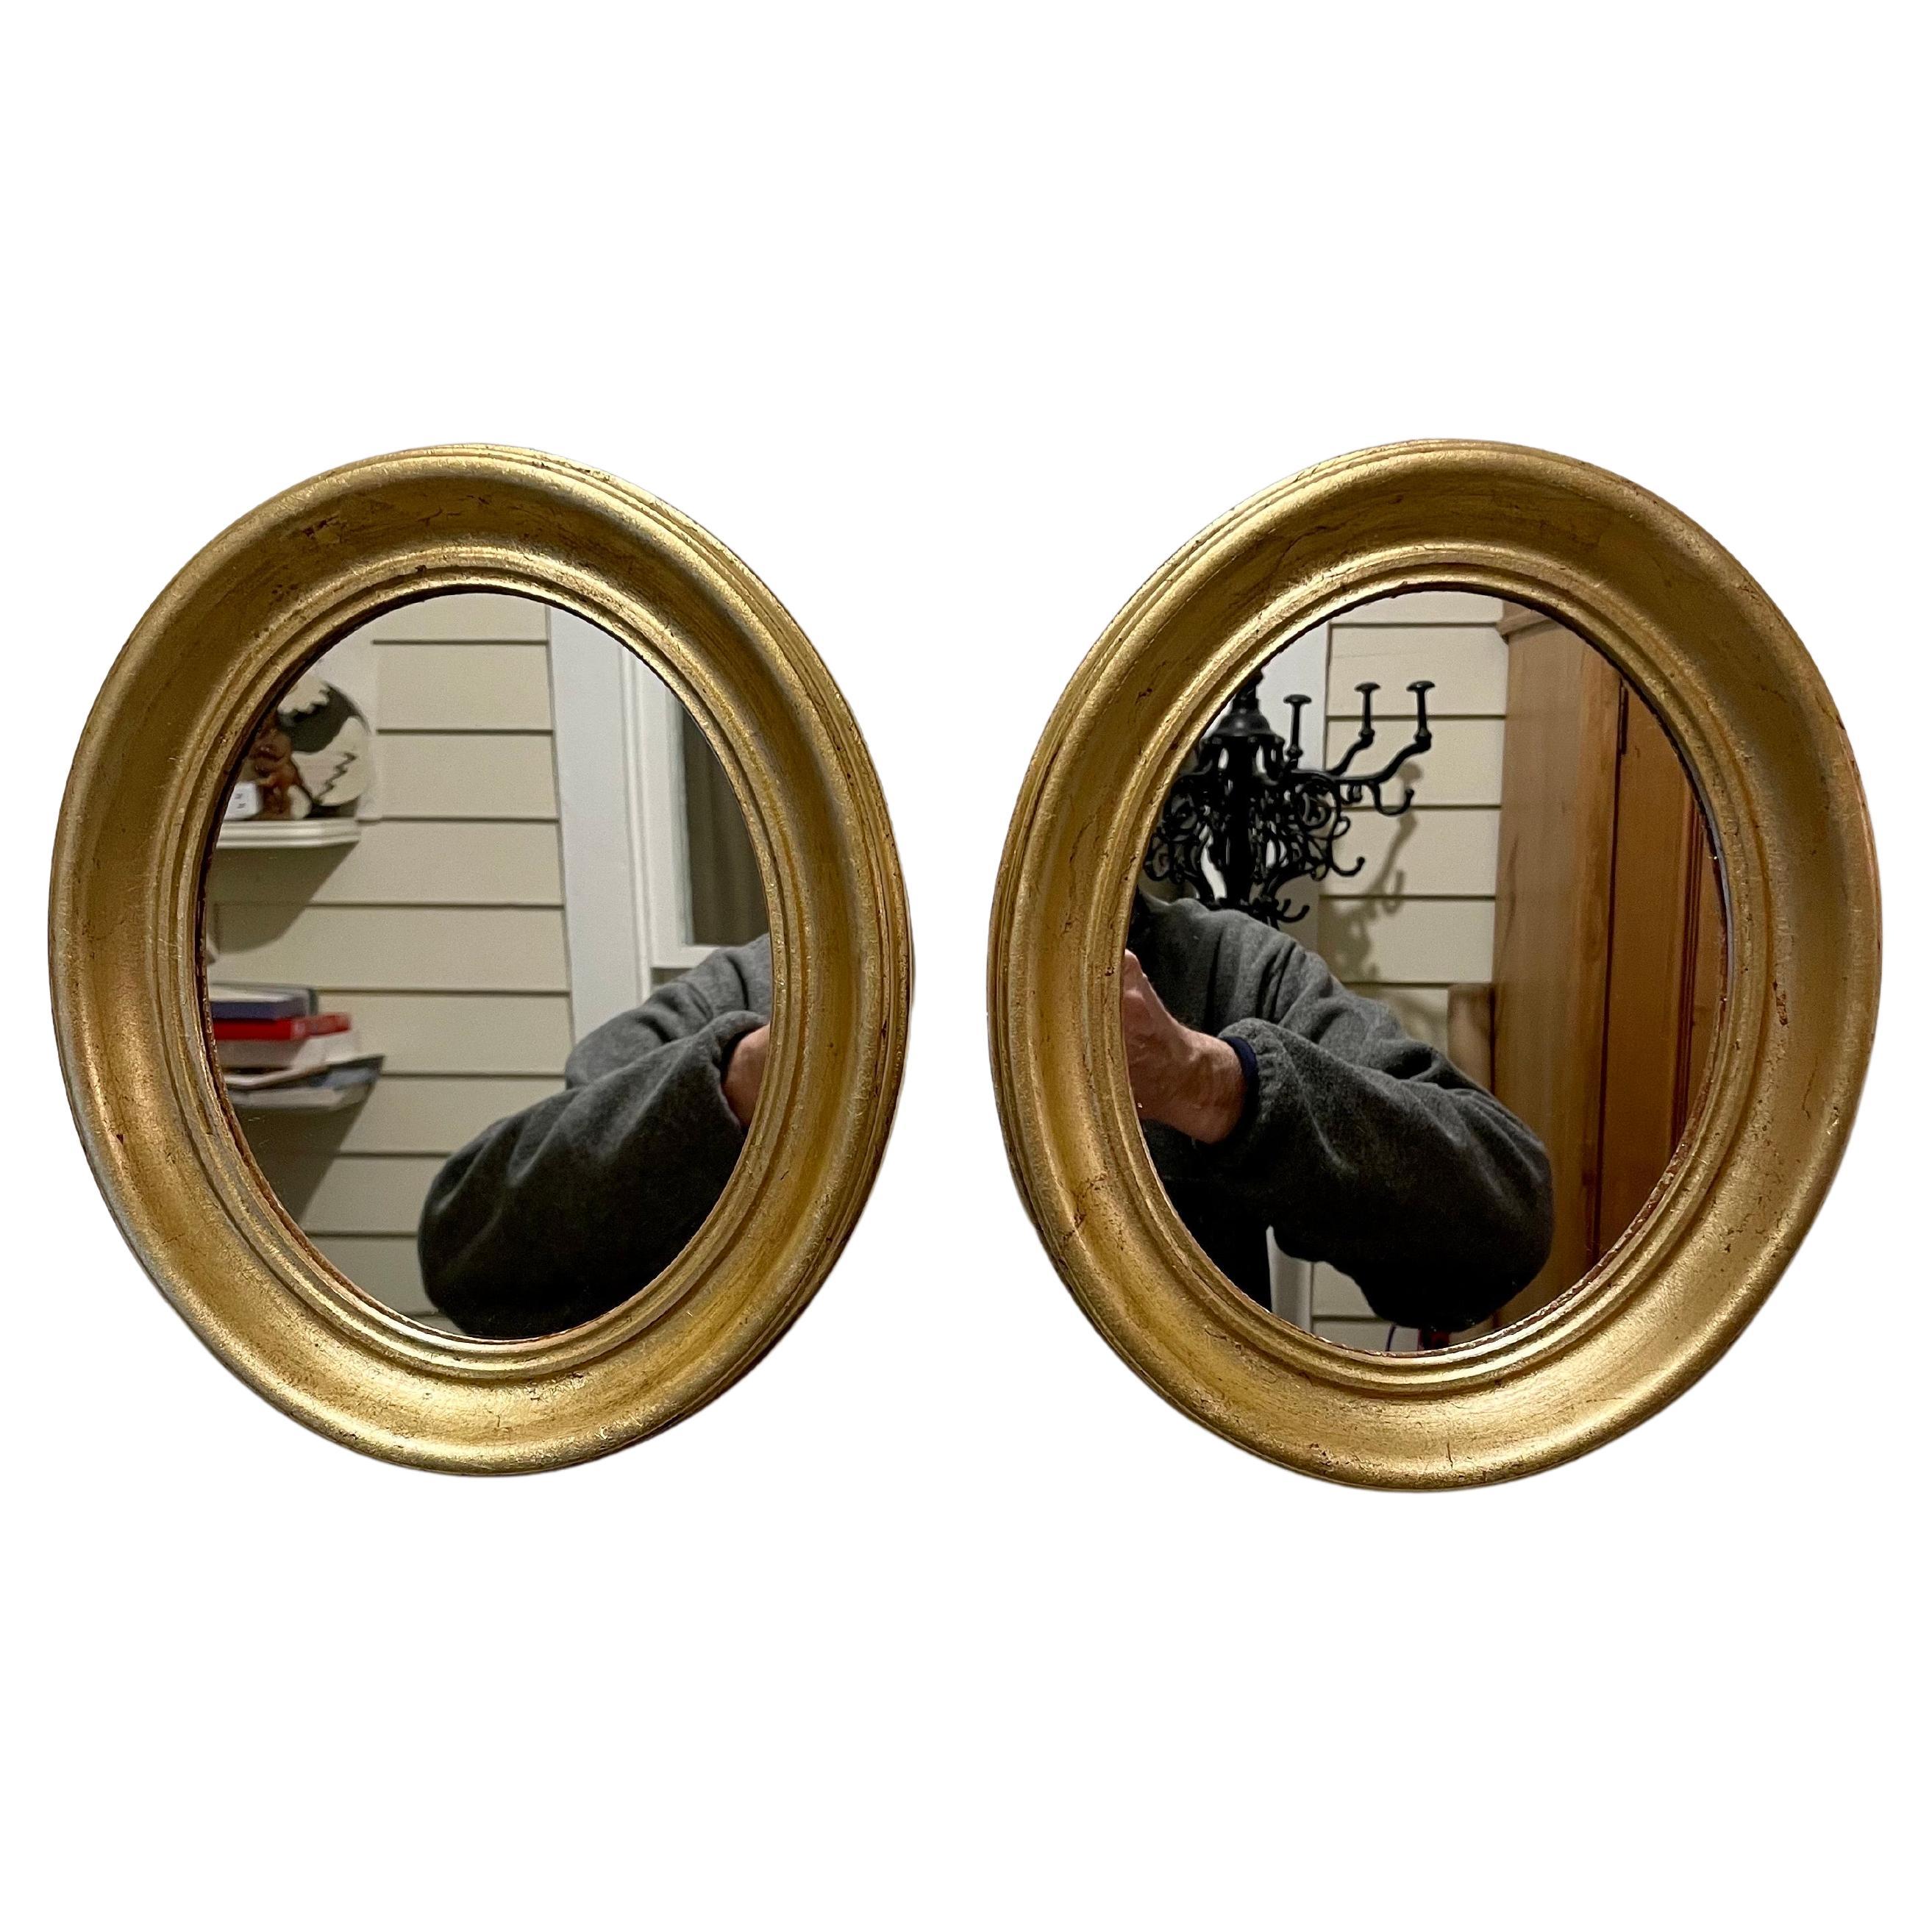 Pair Italian gilt oval mirrors. Each mirror is 11.75